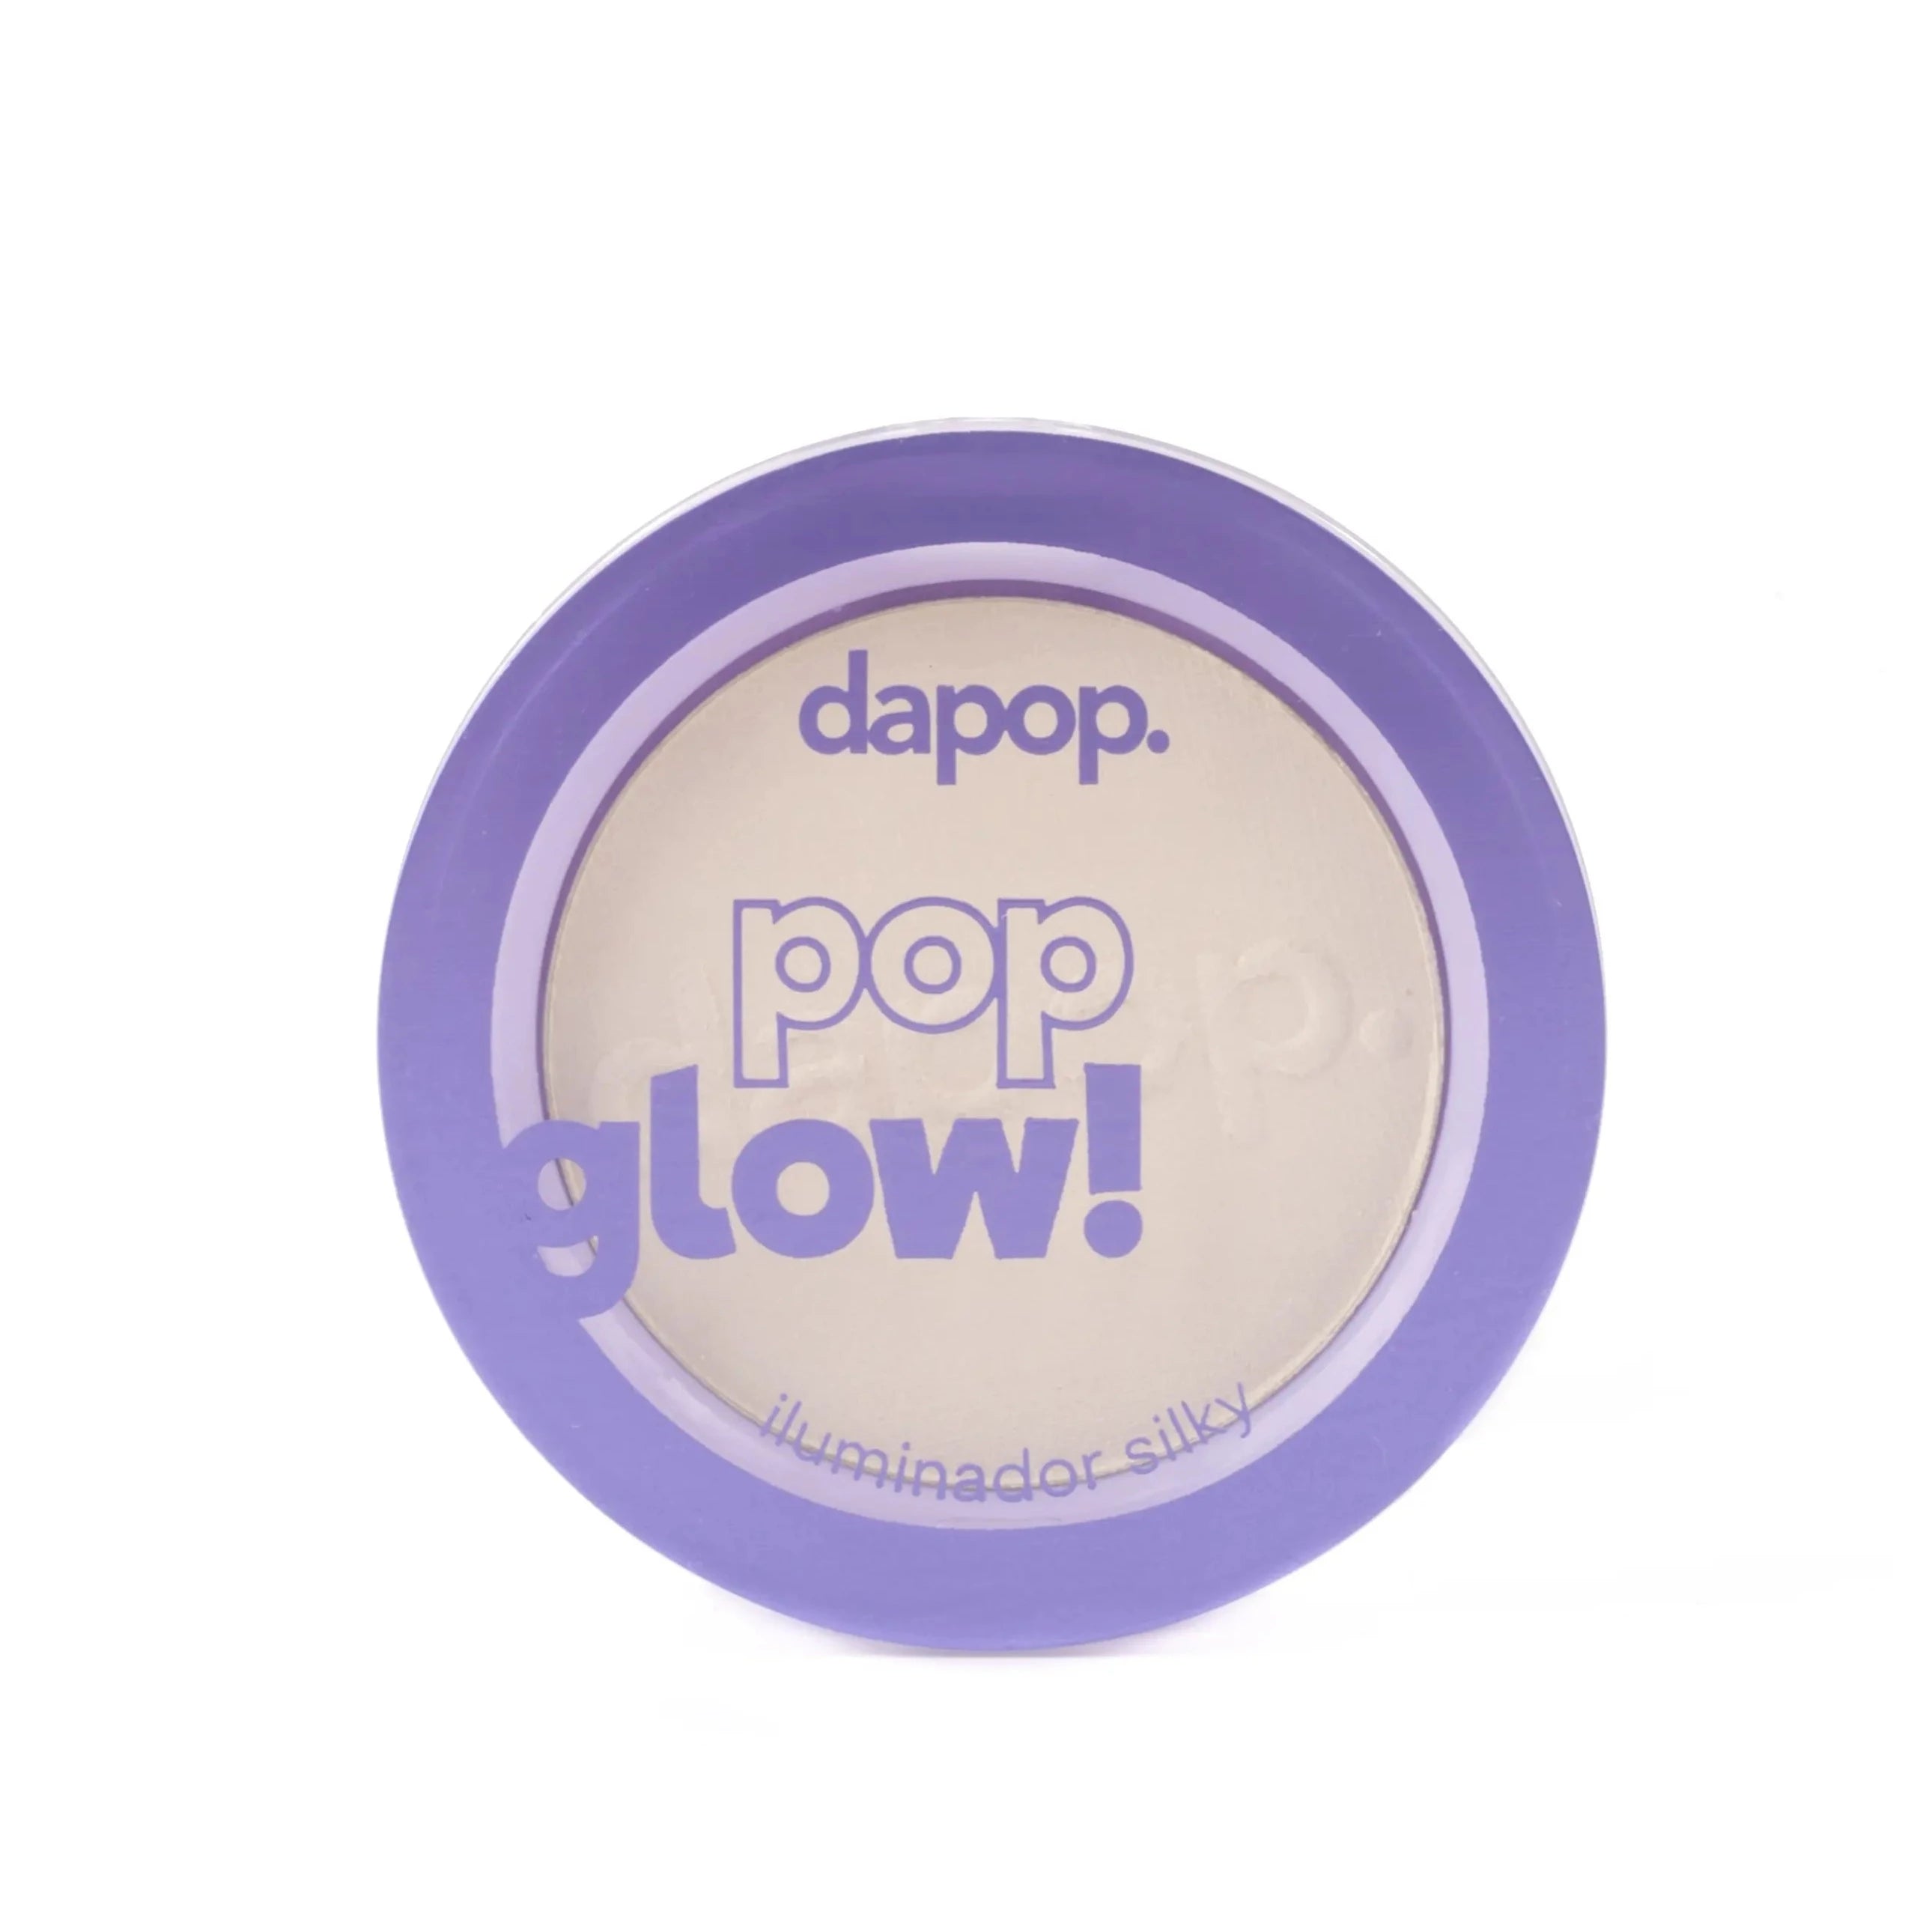 Iluminador Sliky PopGlow - Dapop